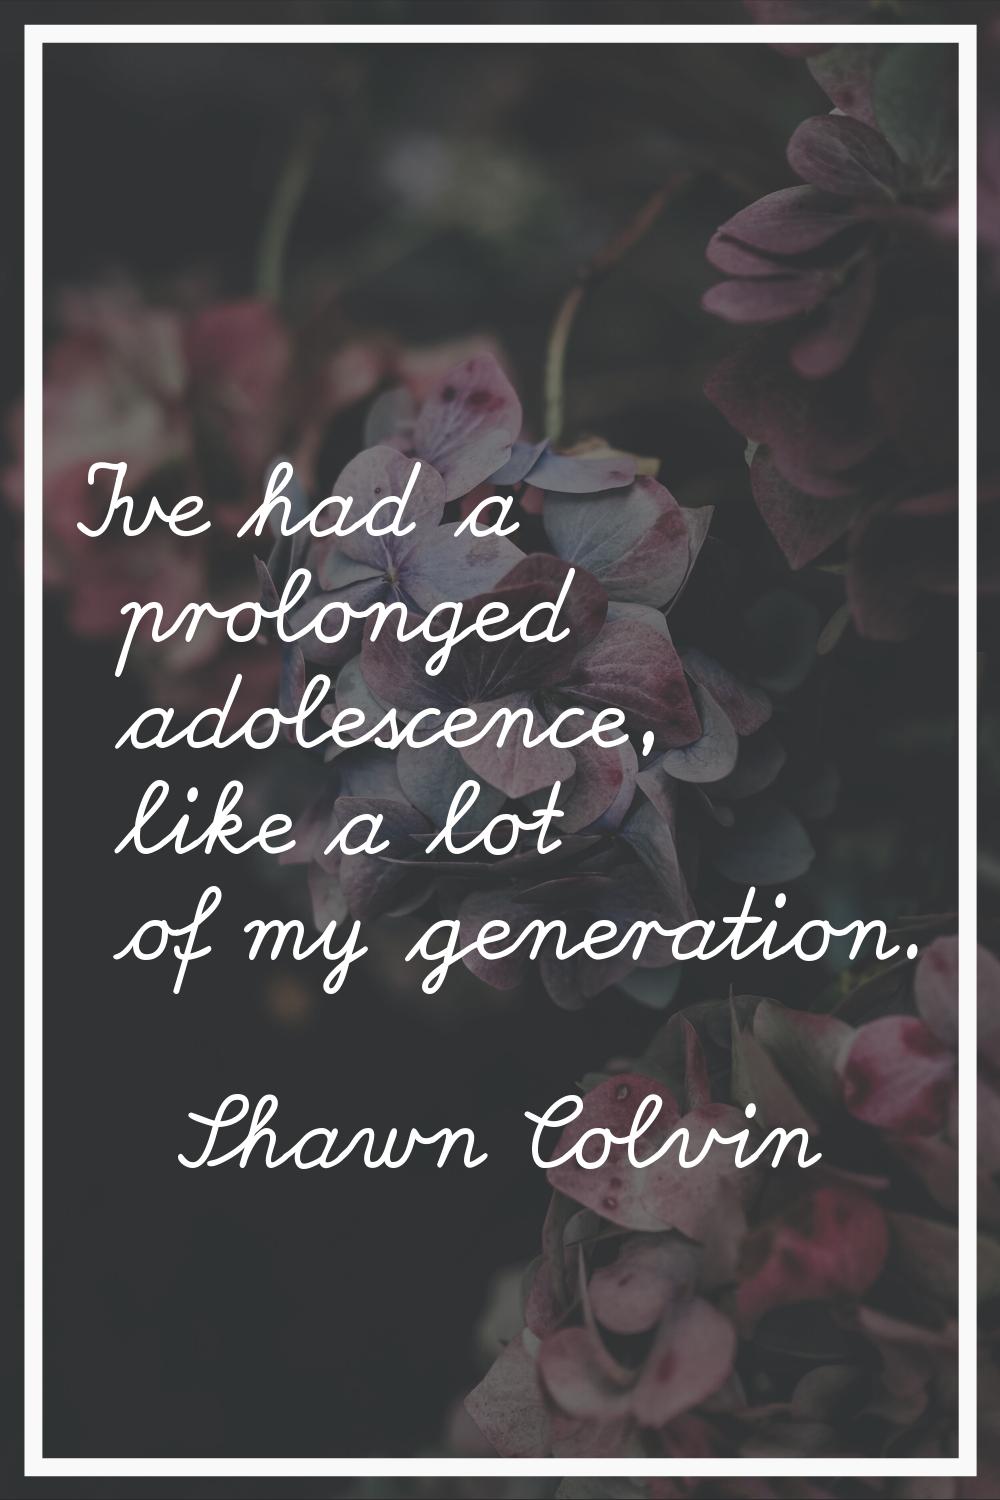 I've had a prolonged adolescence, like a lot of my generation.